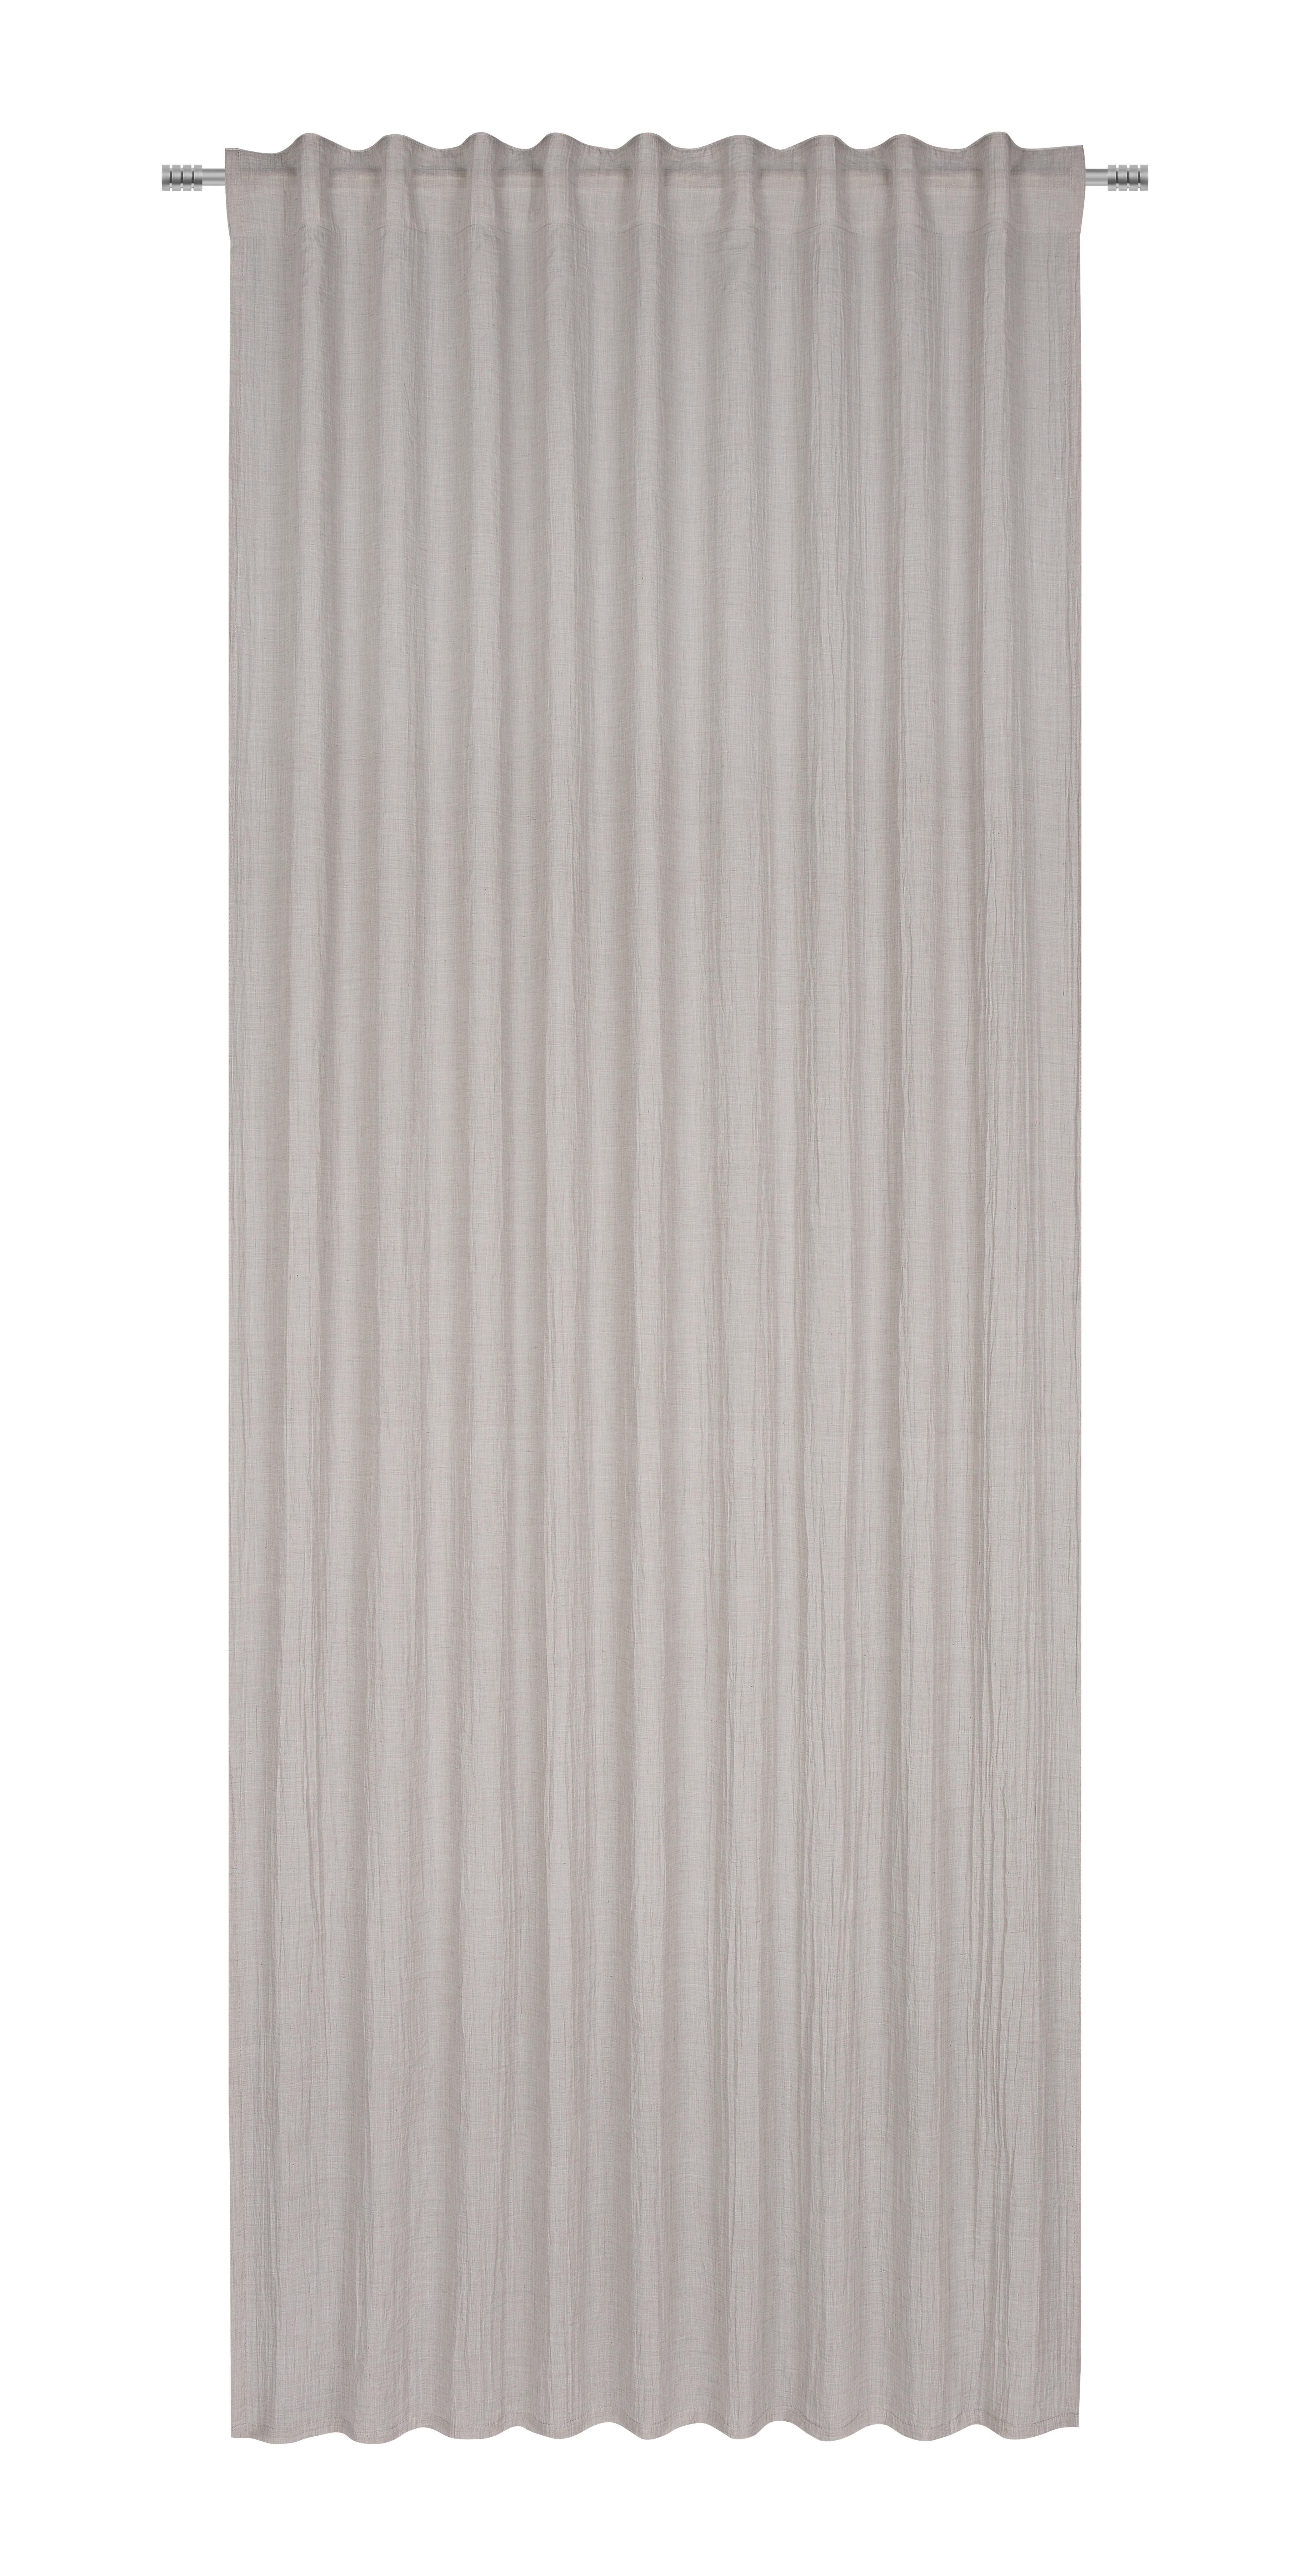 Fertigvorhang Ramona ca. 135x245cm - Grau, MODERN, Textil (135/245cm) - Modern Living